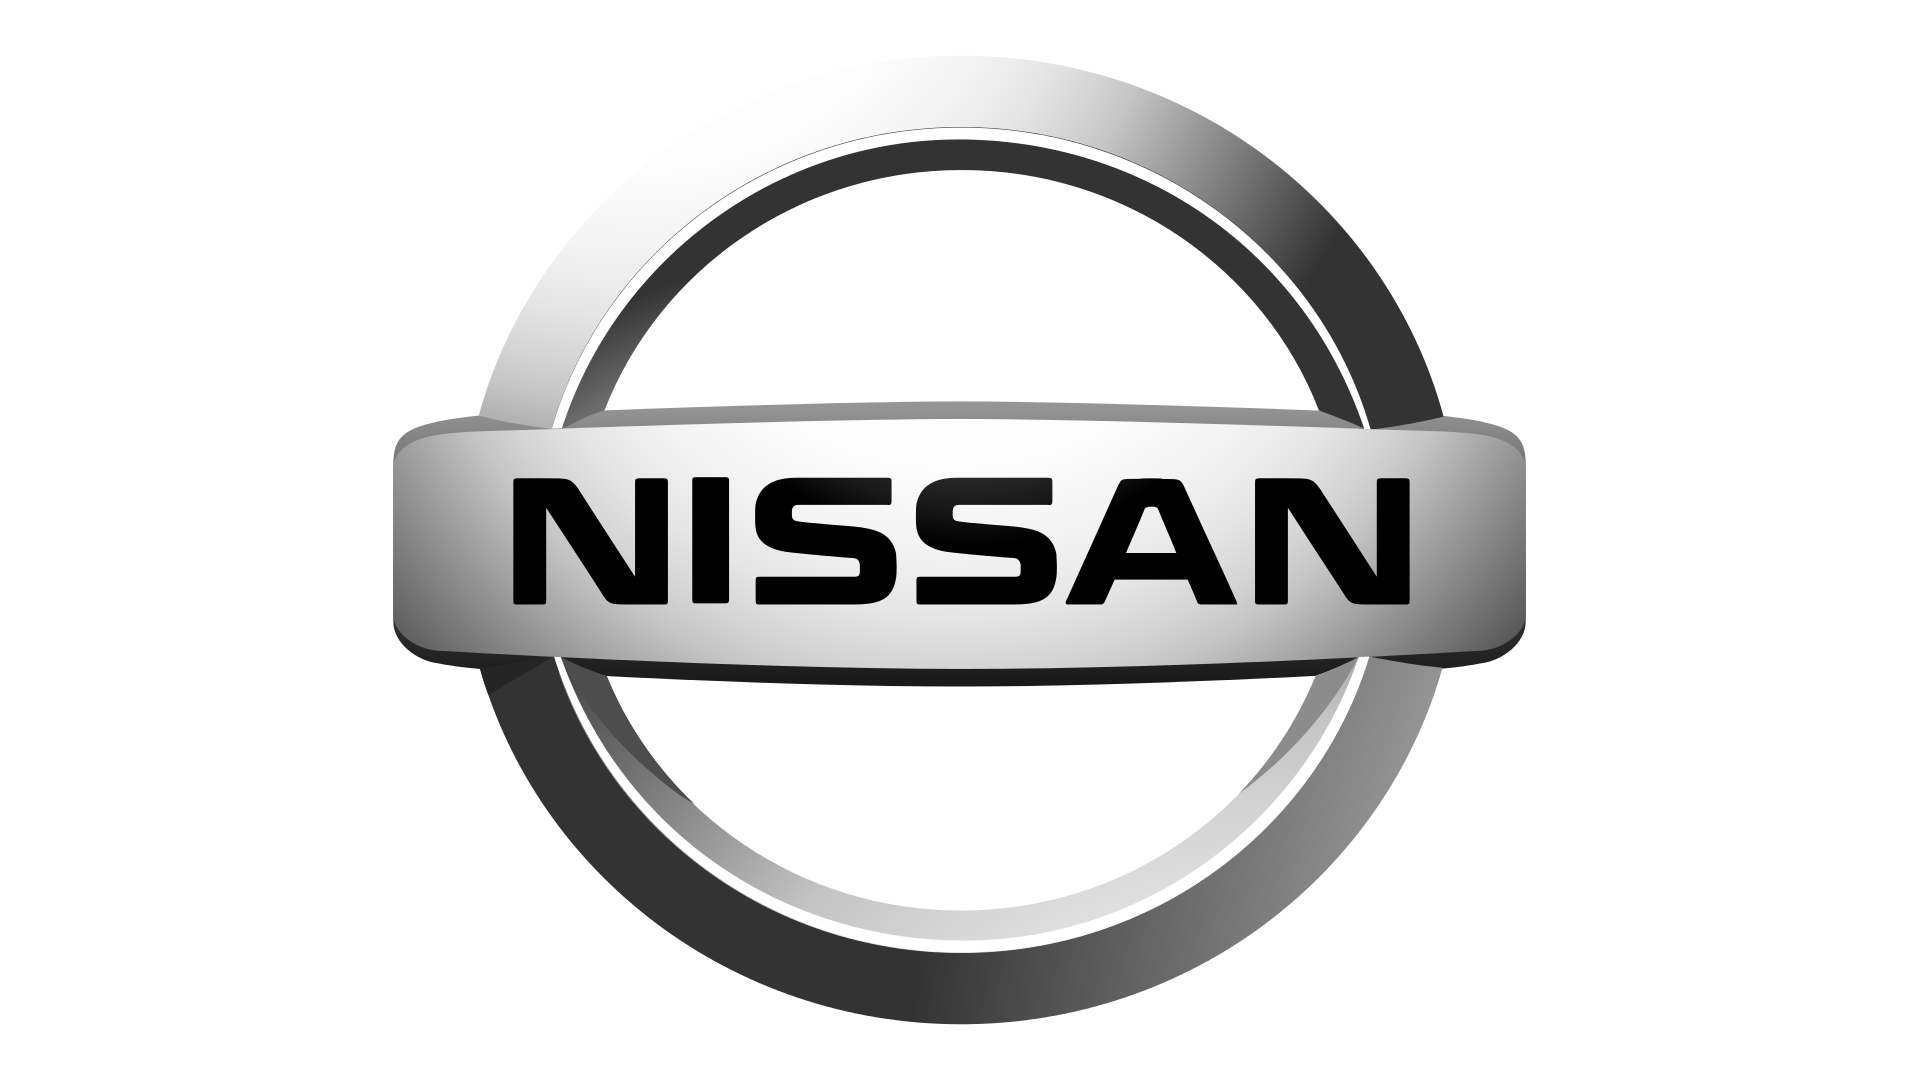 Nissan Text Logo 1920x1080 (H